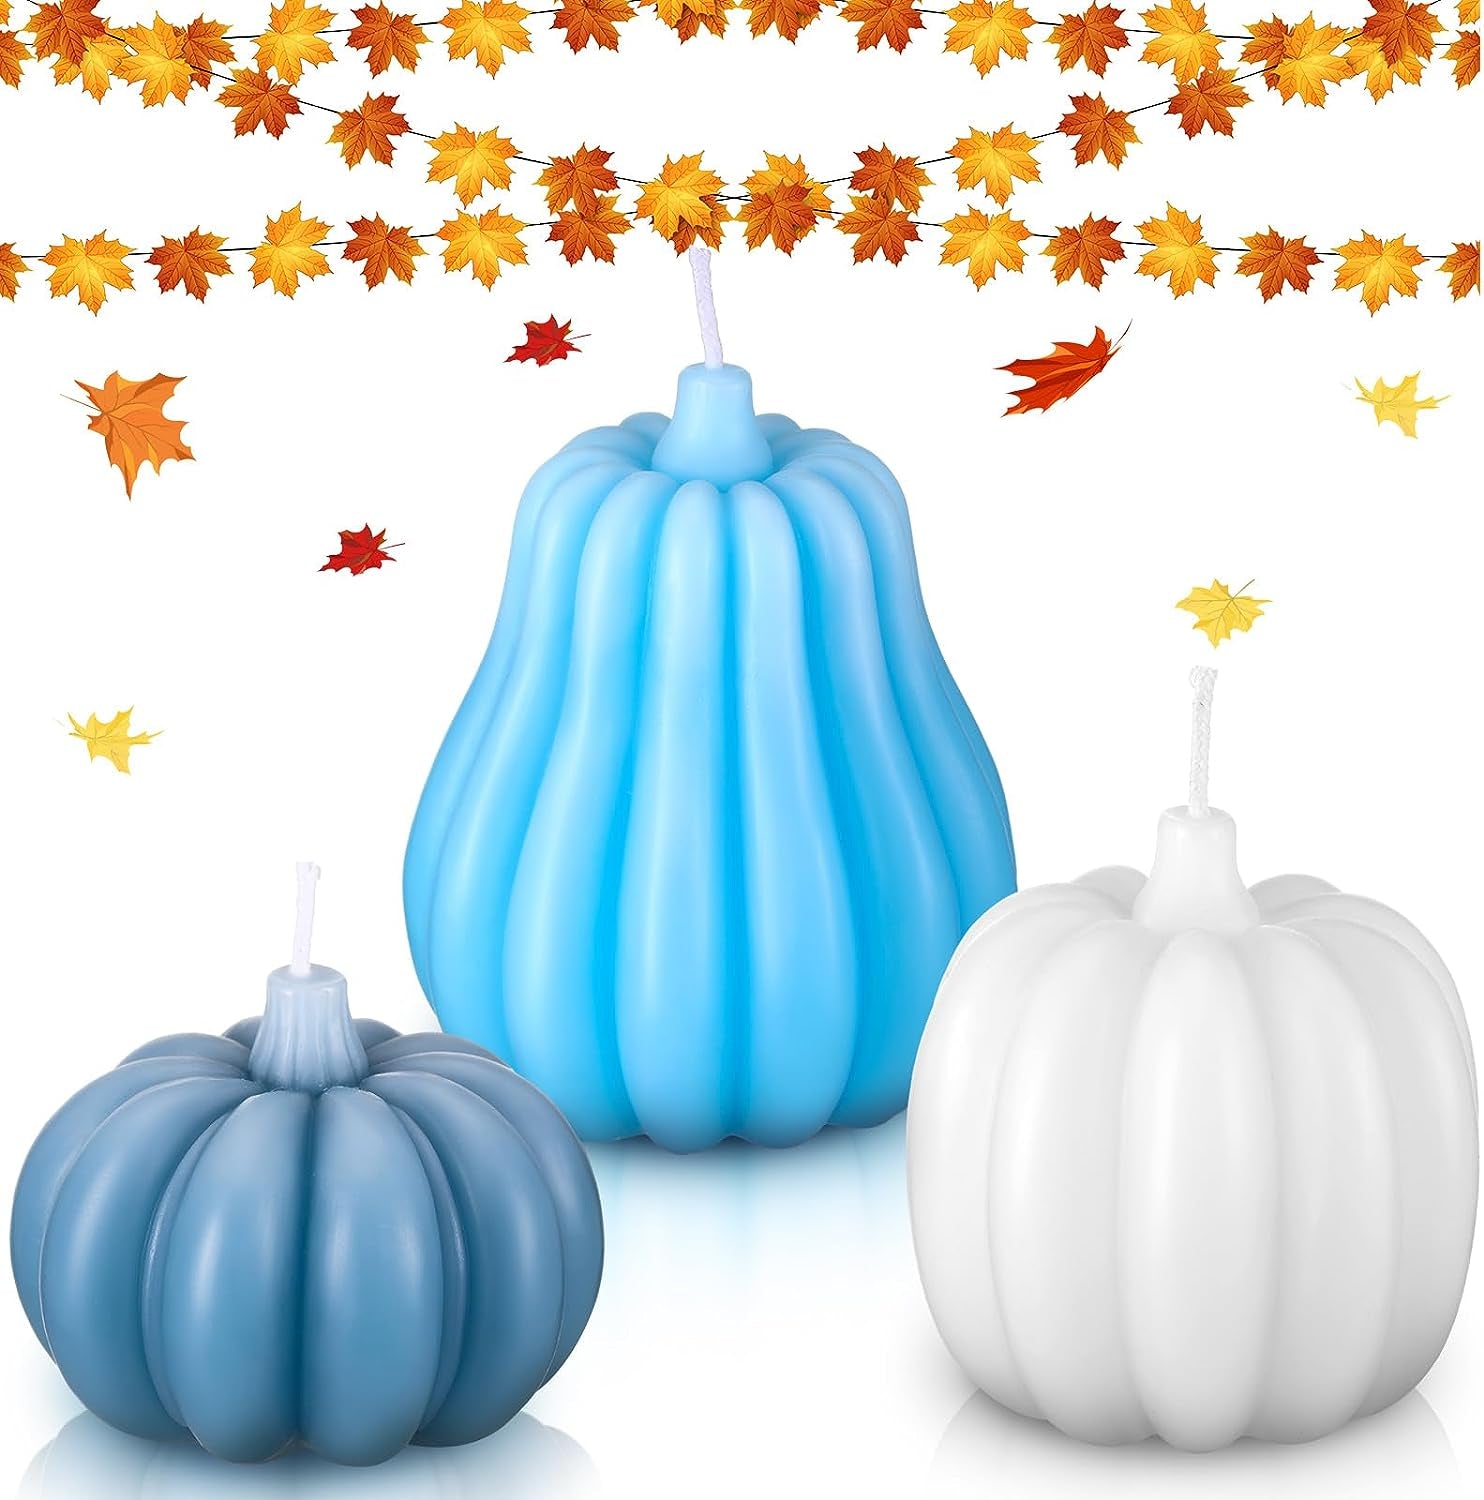 Soy Wax Candles: Handmade BLUE Pumpkin Shaped Scented Candles | Pumpkin Dreams: 3 Handmade Fall Soy Candles in Pastel Hues 🍂